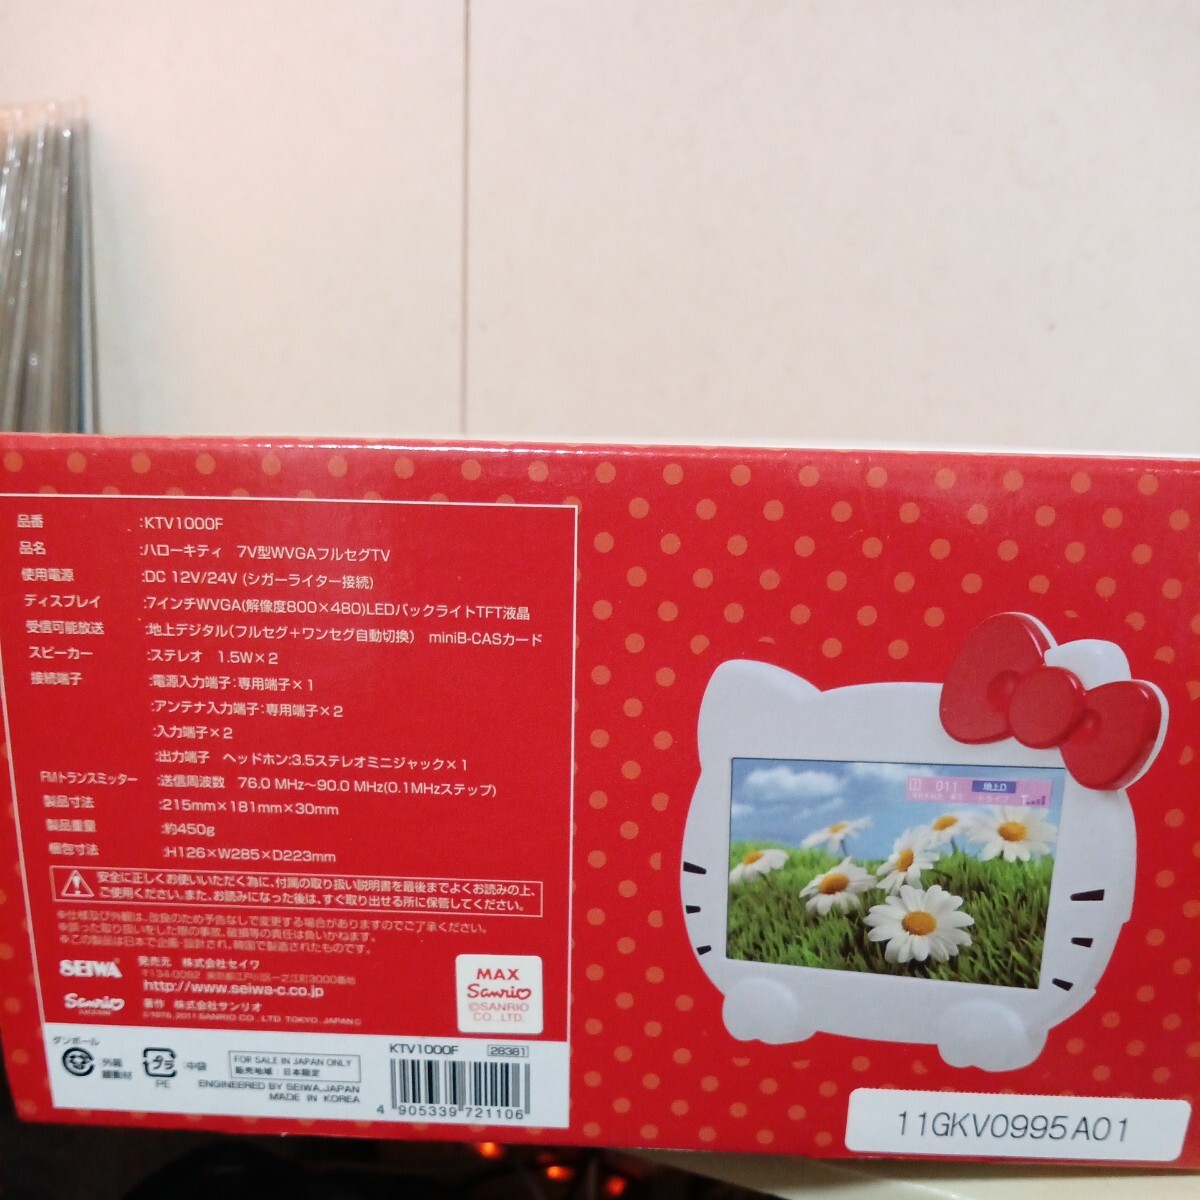 #294 SEIWA Hello Kitty TV 7V型地上デジタルフルセグ対応 KTV1000F ハローキティ テレビ サンリオ_画像7